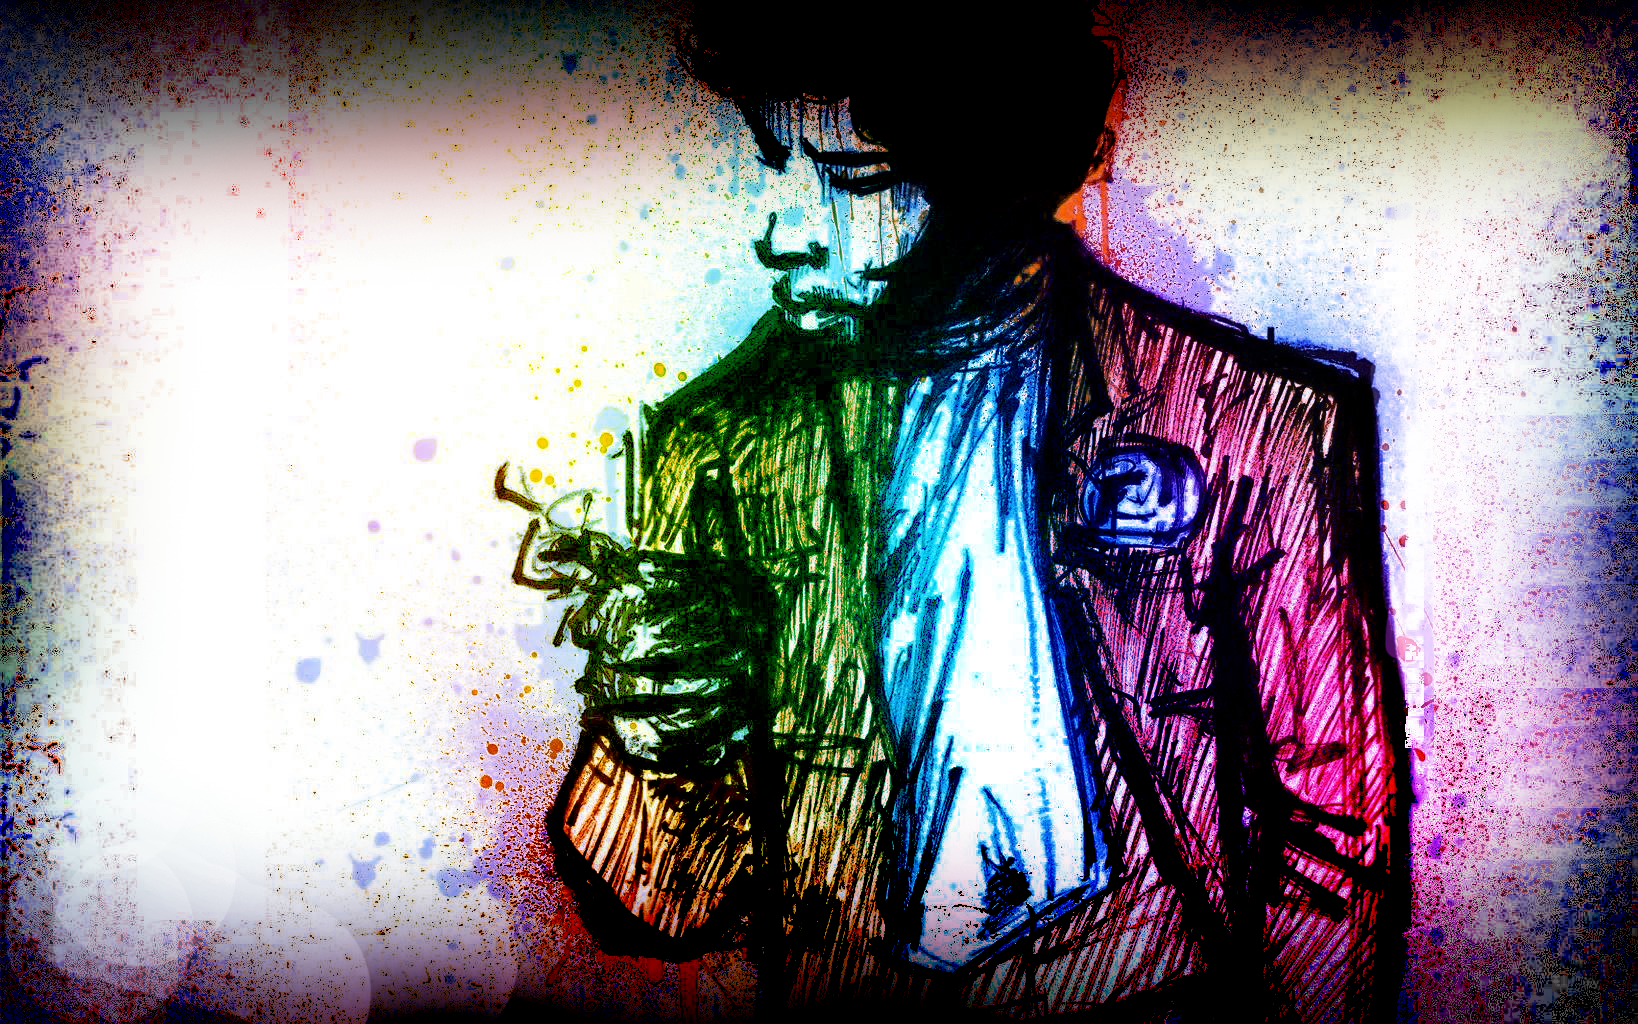 48 Jimi Hendrix Iphone Wallpaper On Wallpapersafari